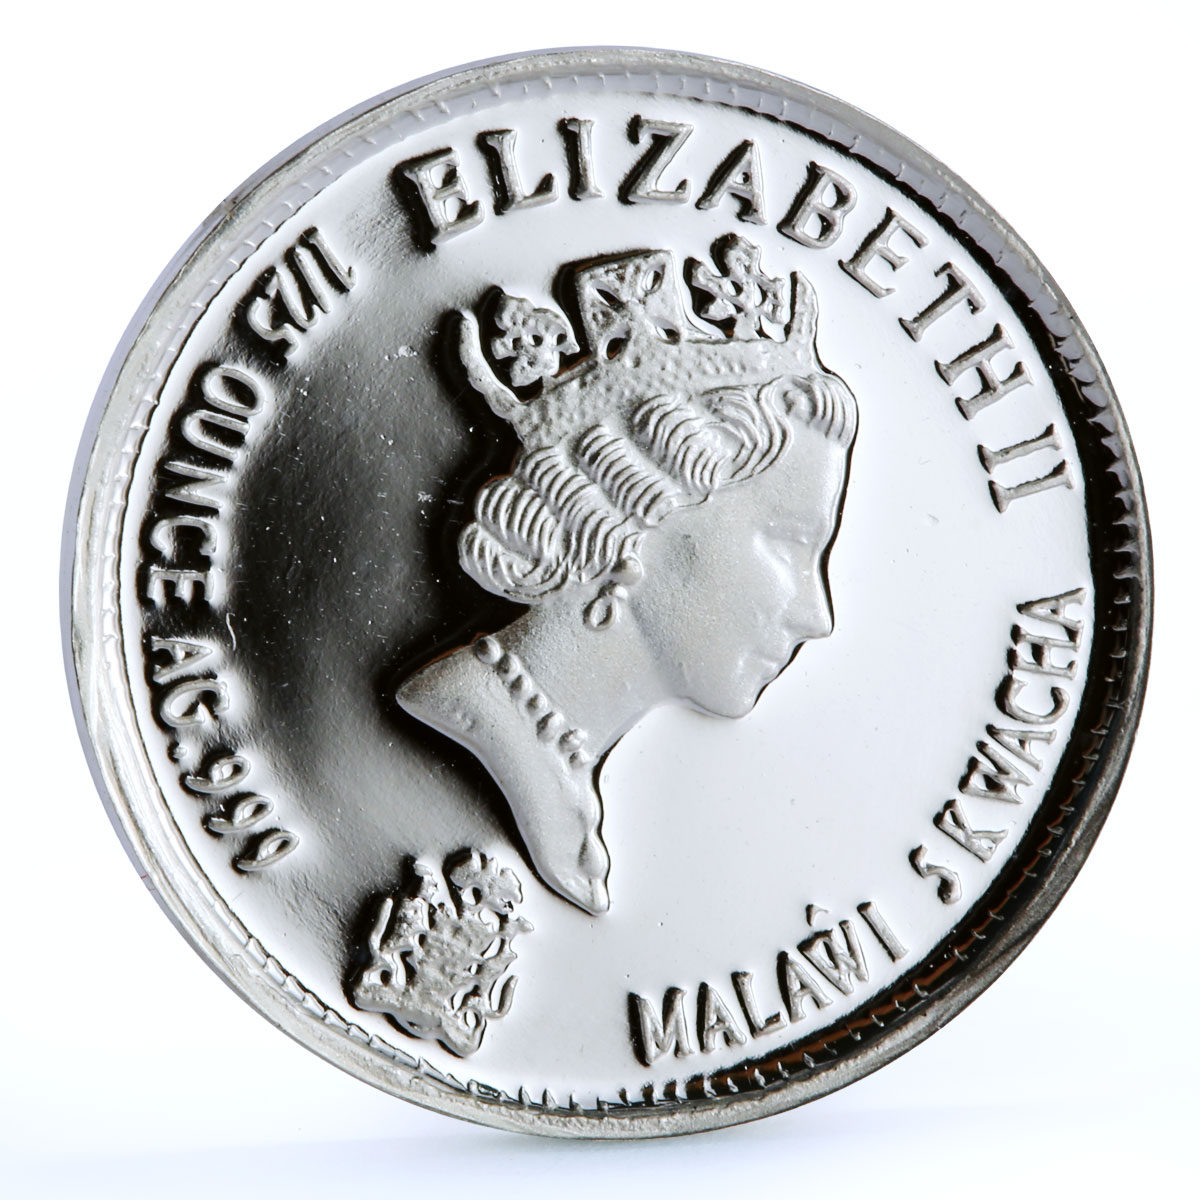 Malawi 5 kwacha Investment Coins Australian Kookaburra proof silver coin 2006